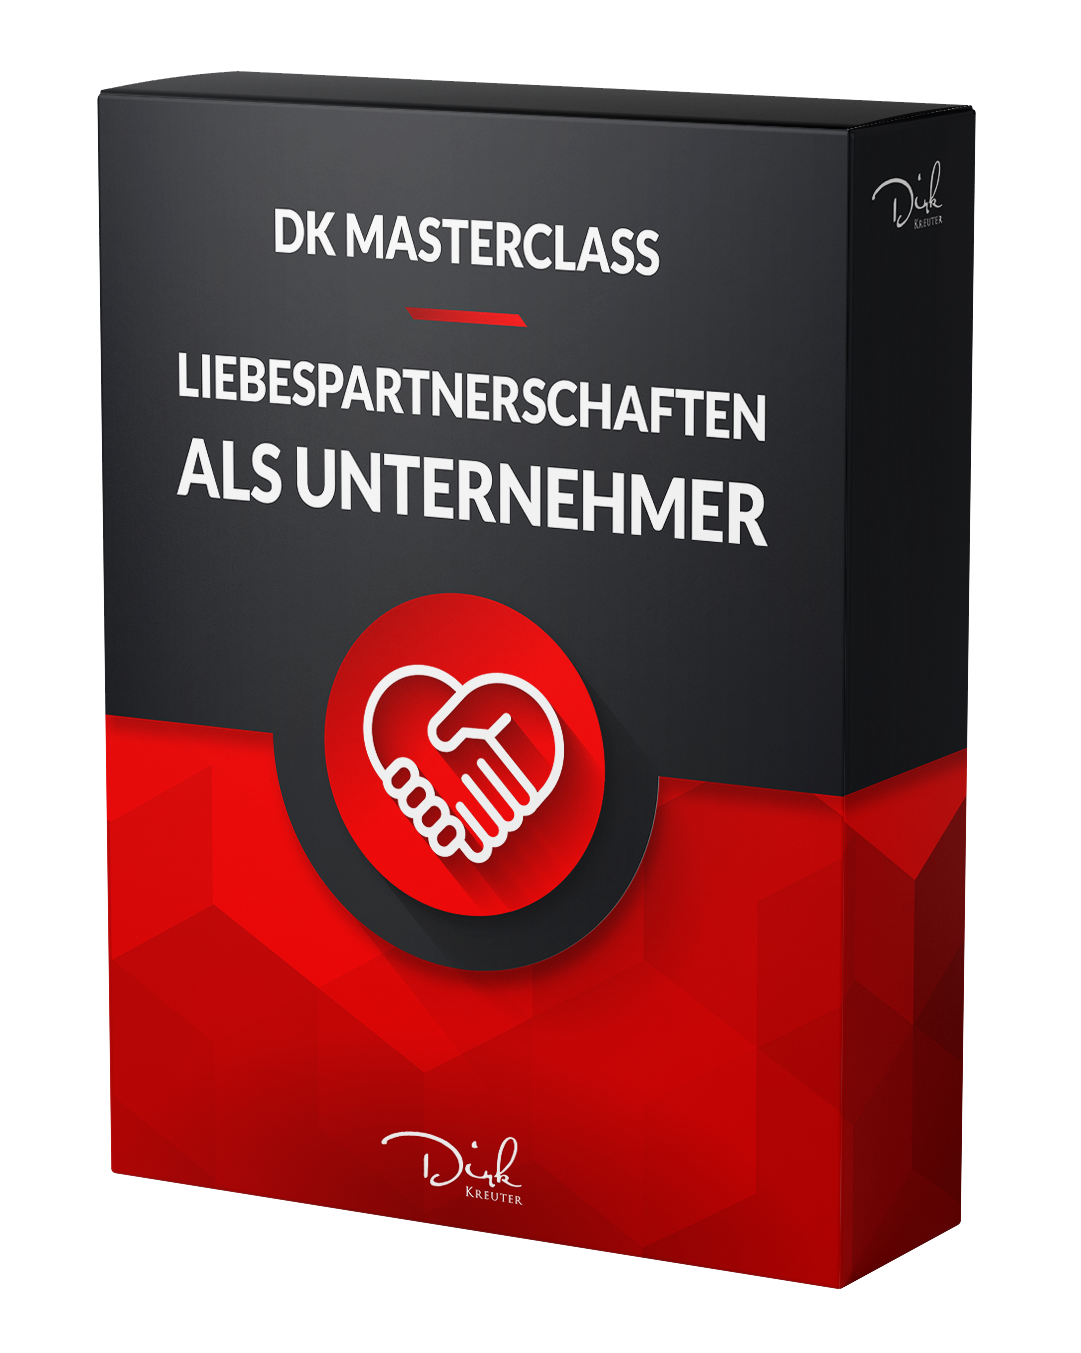 DK Masterclass - Liebespartnerschaften als Unternehmer online kurs von dirk kreuter